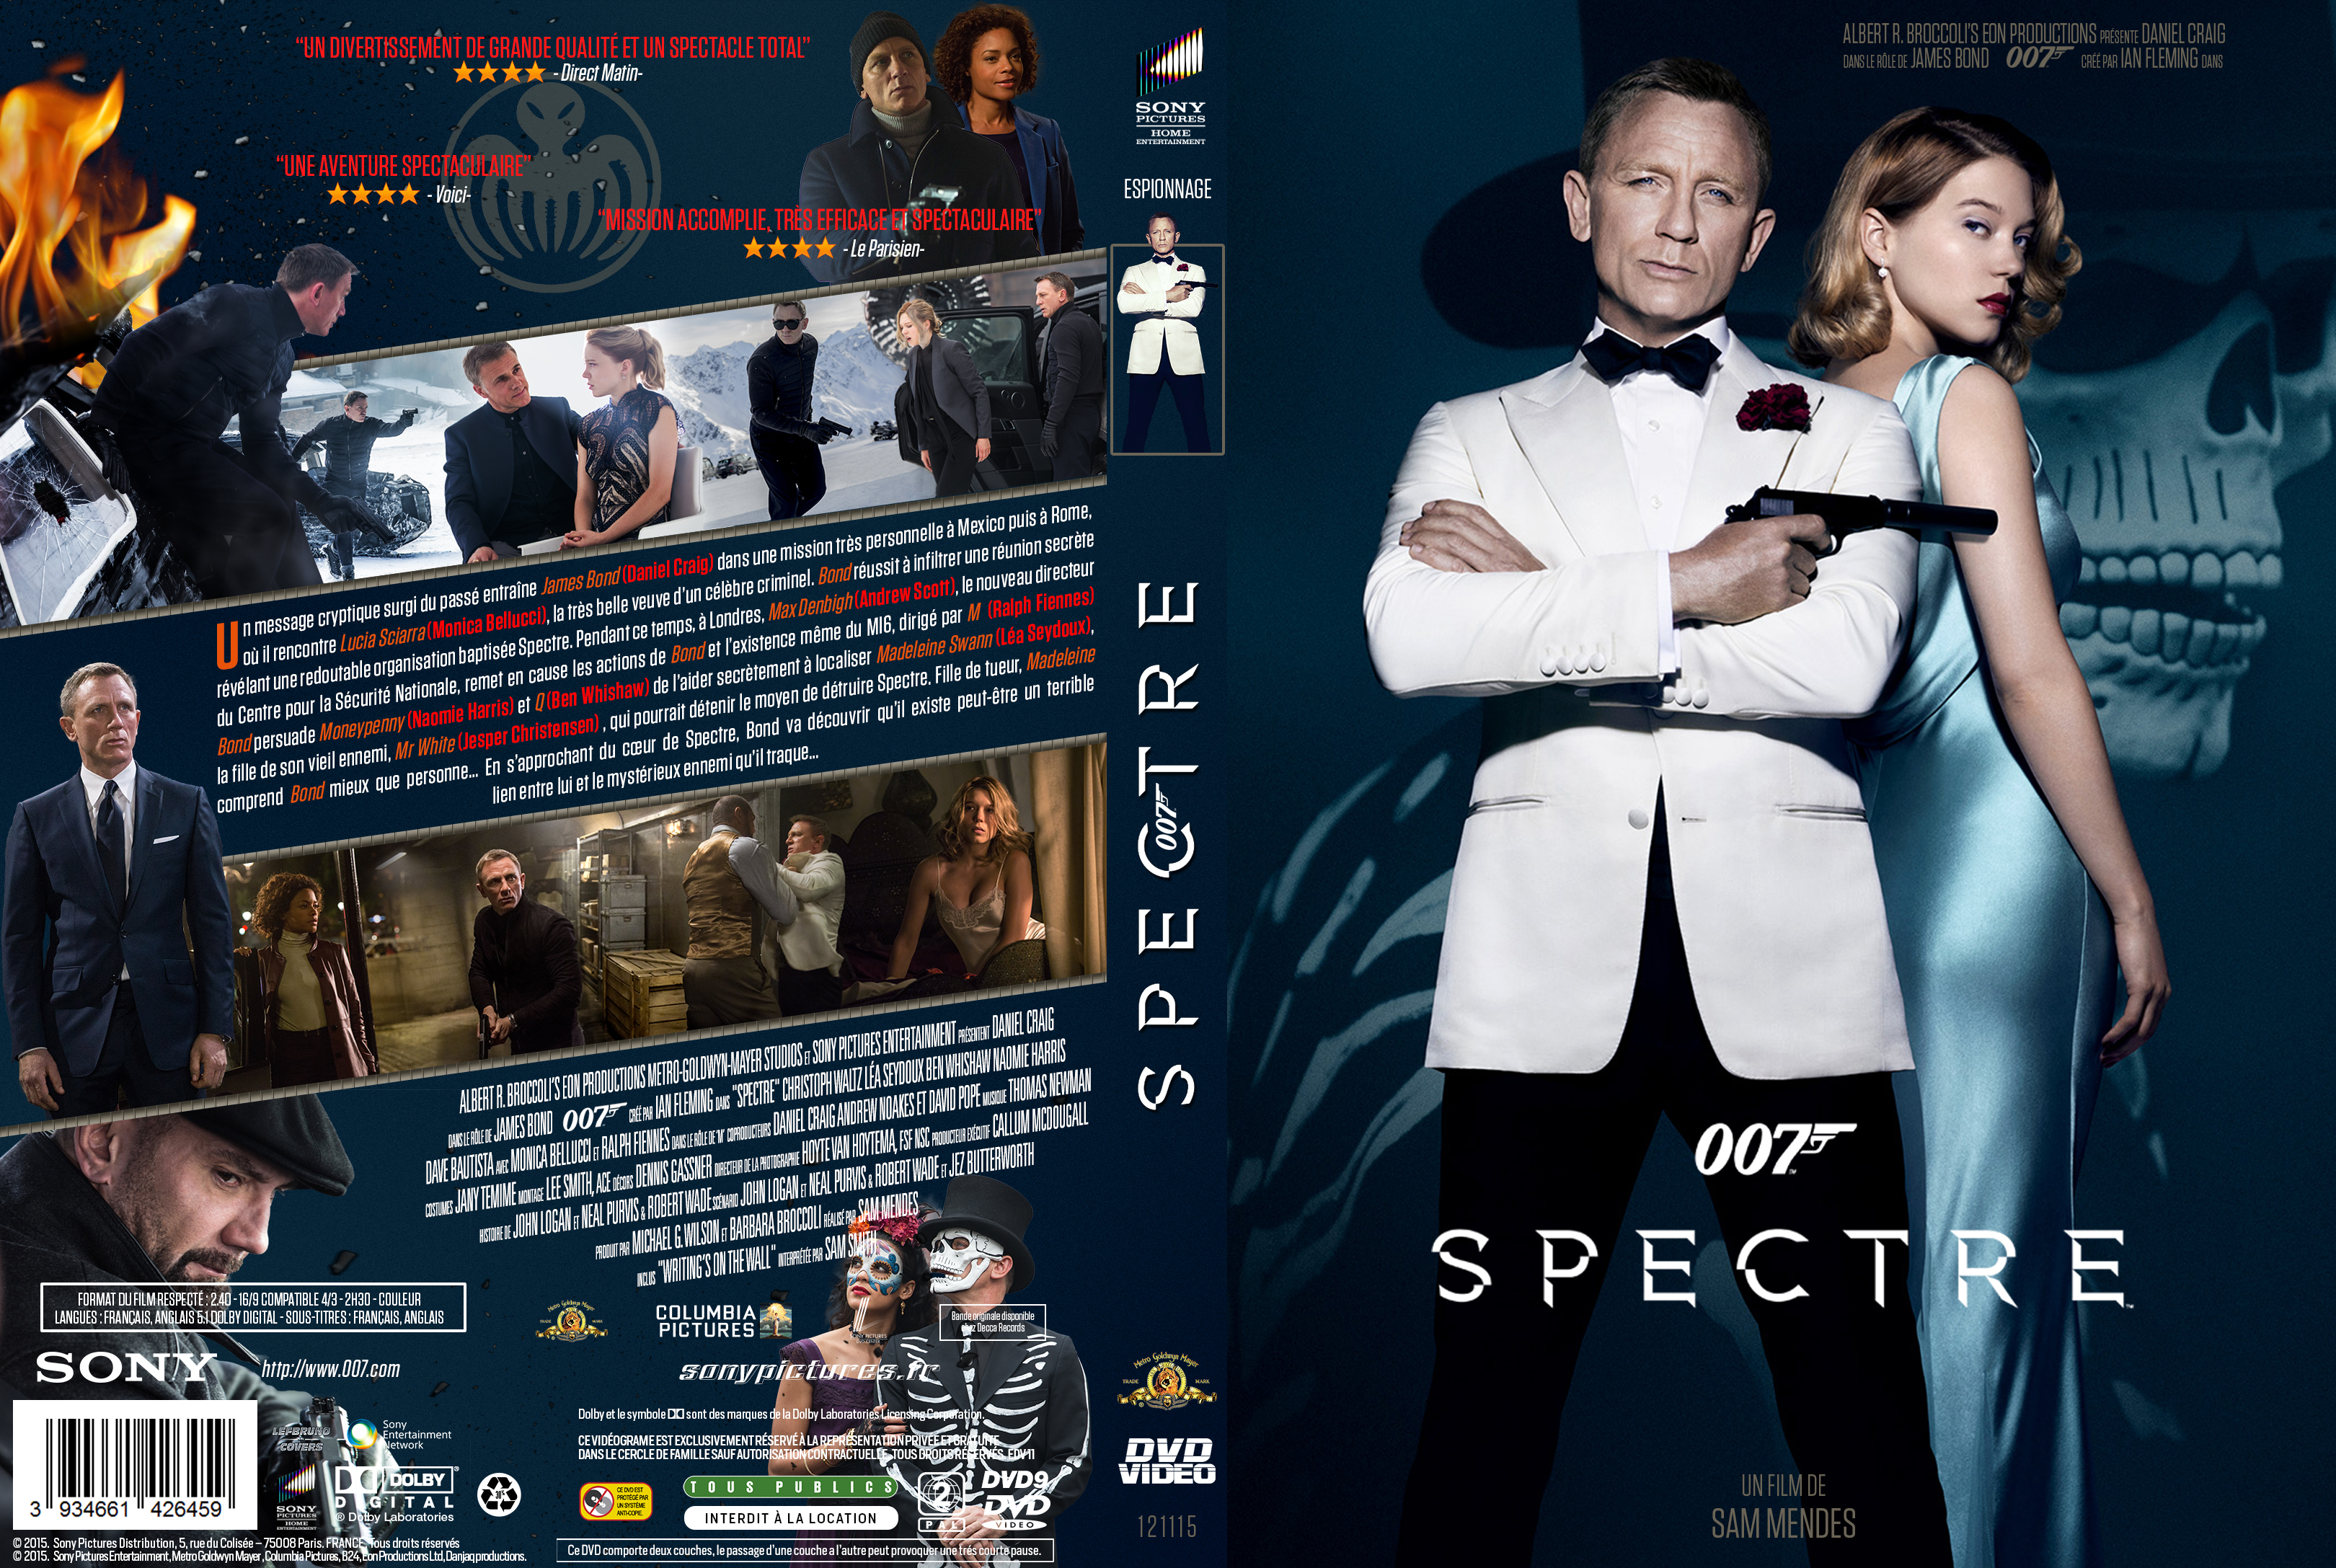 Jaquette DVD 007 Spectre custom v2